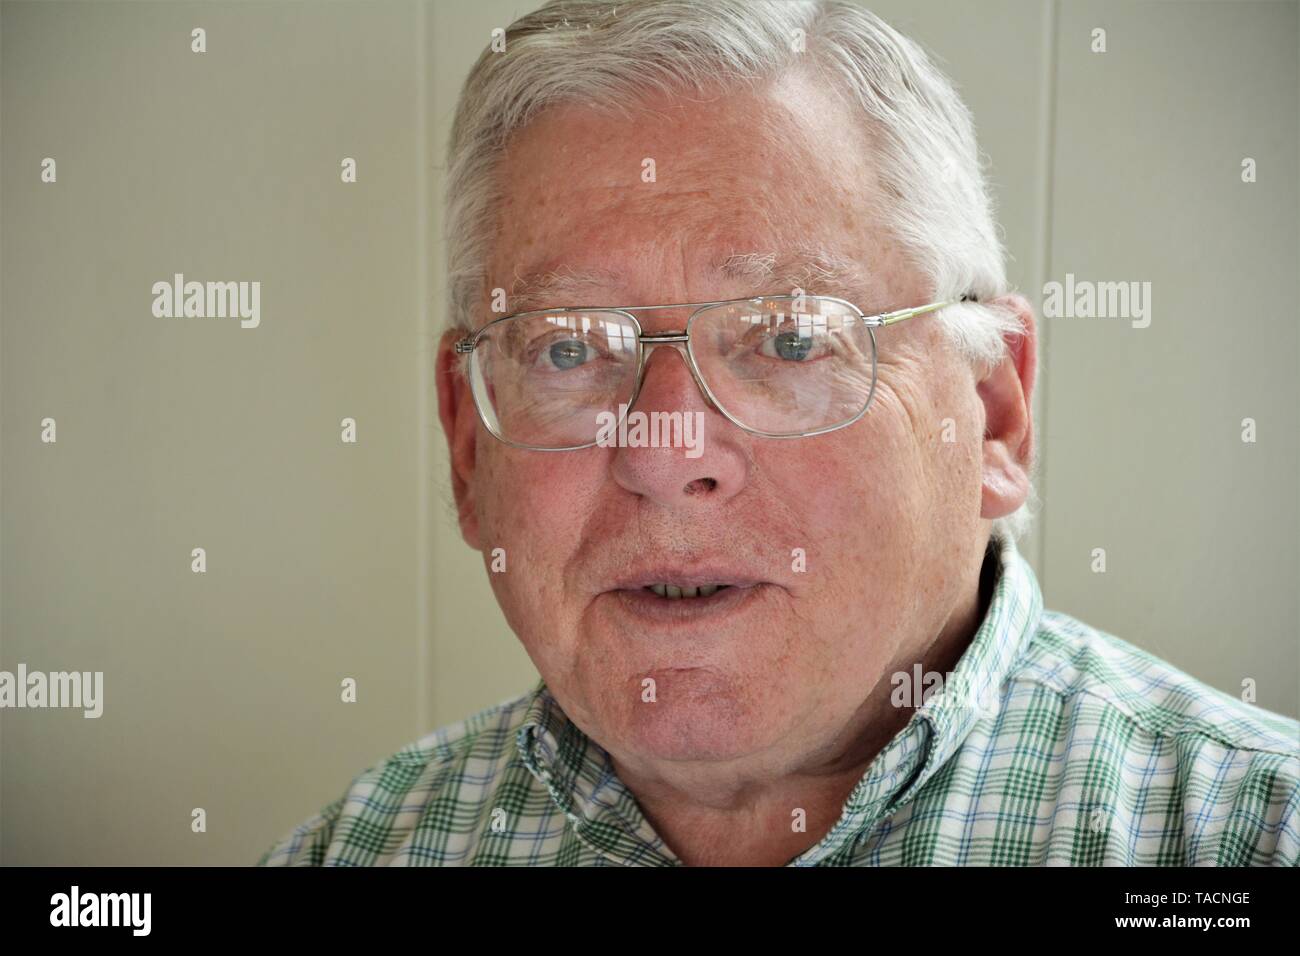 Senior man with real graying hair wearing glasses Stock Photo